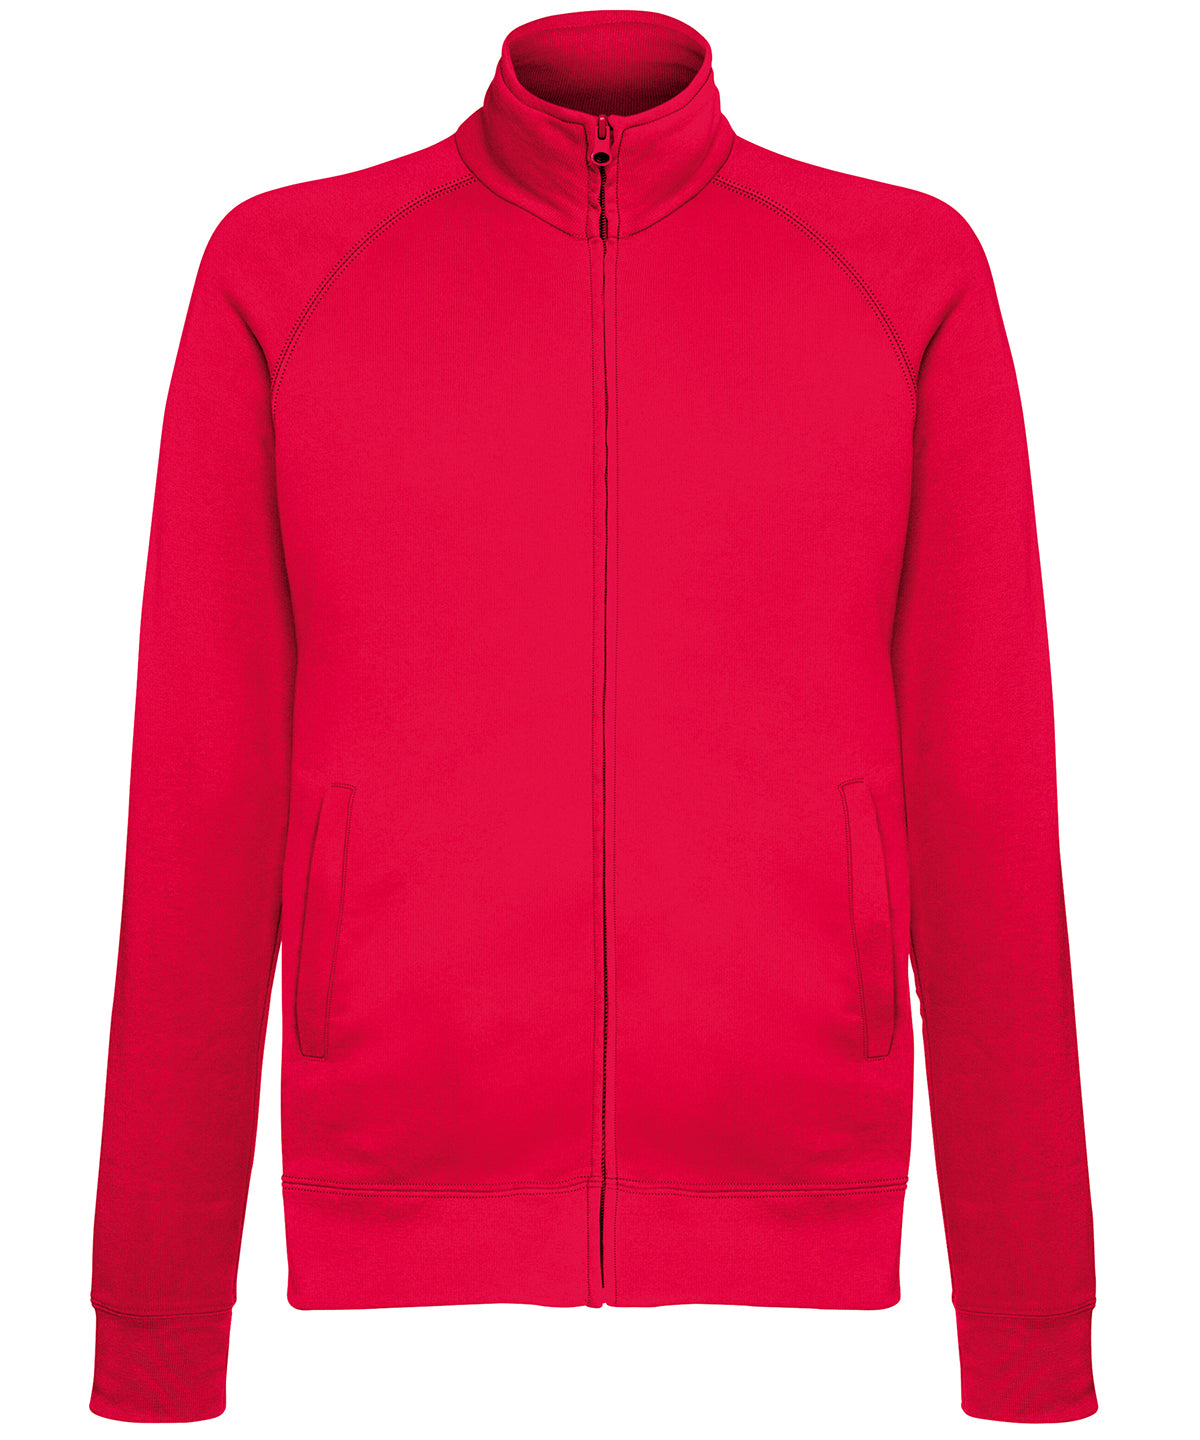 Háskólapeysur - Lightweight Sweatshirt Jacket